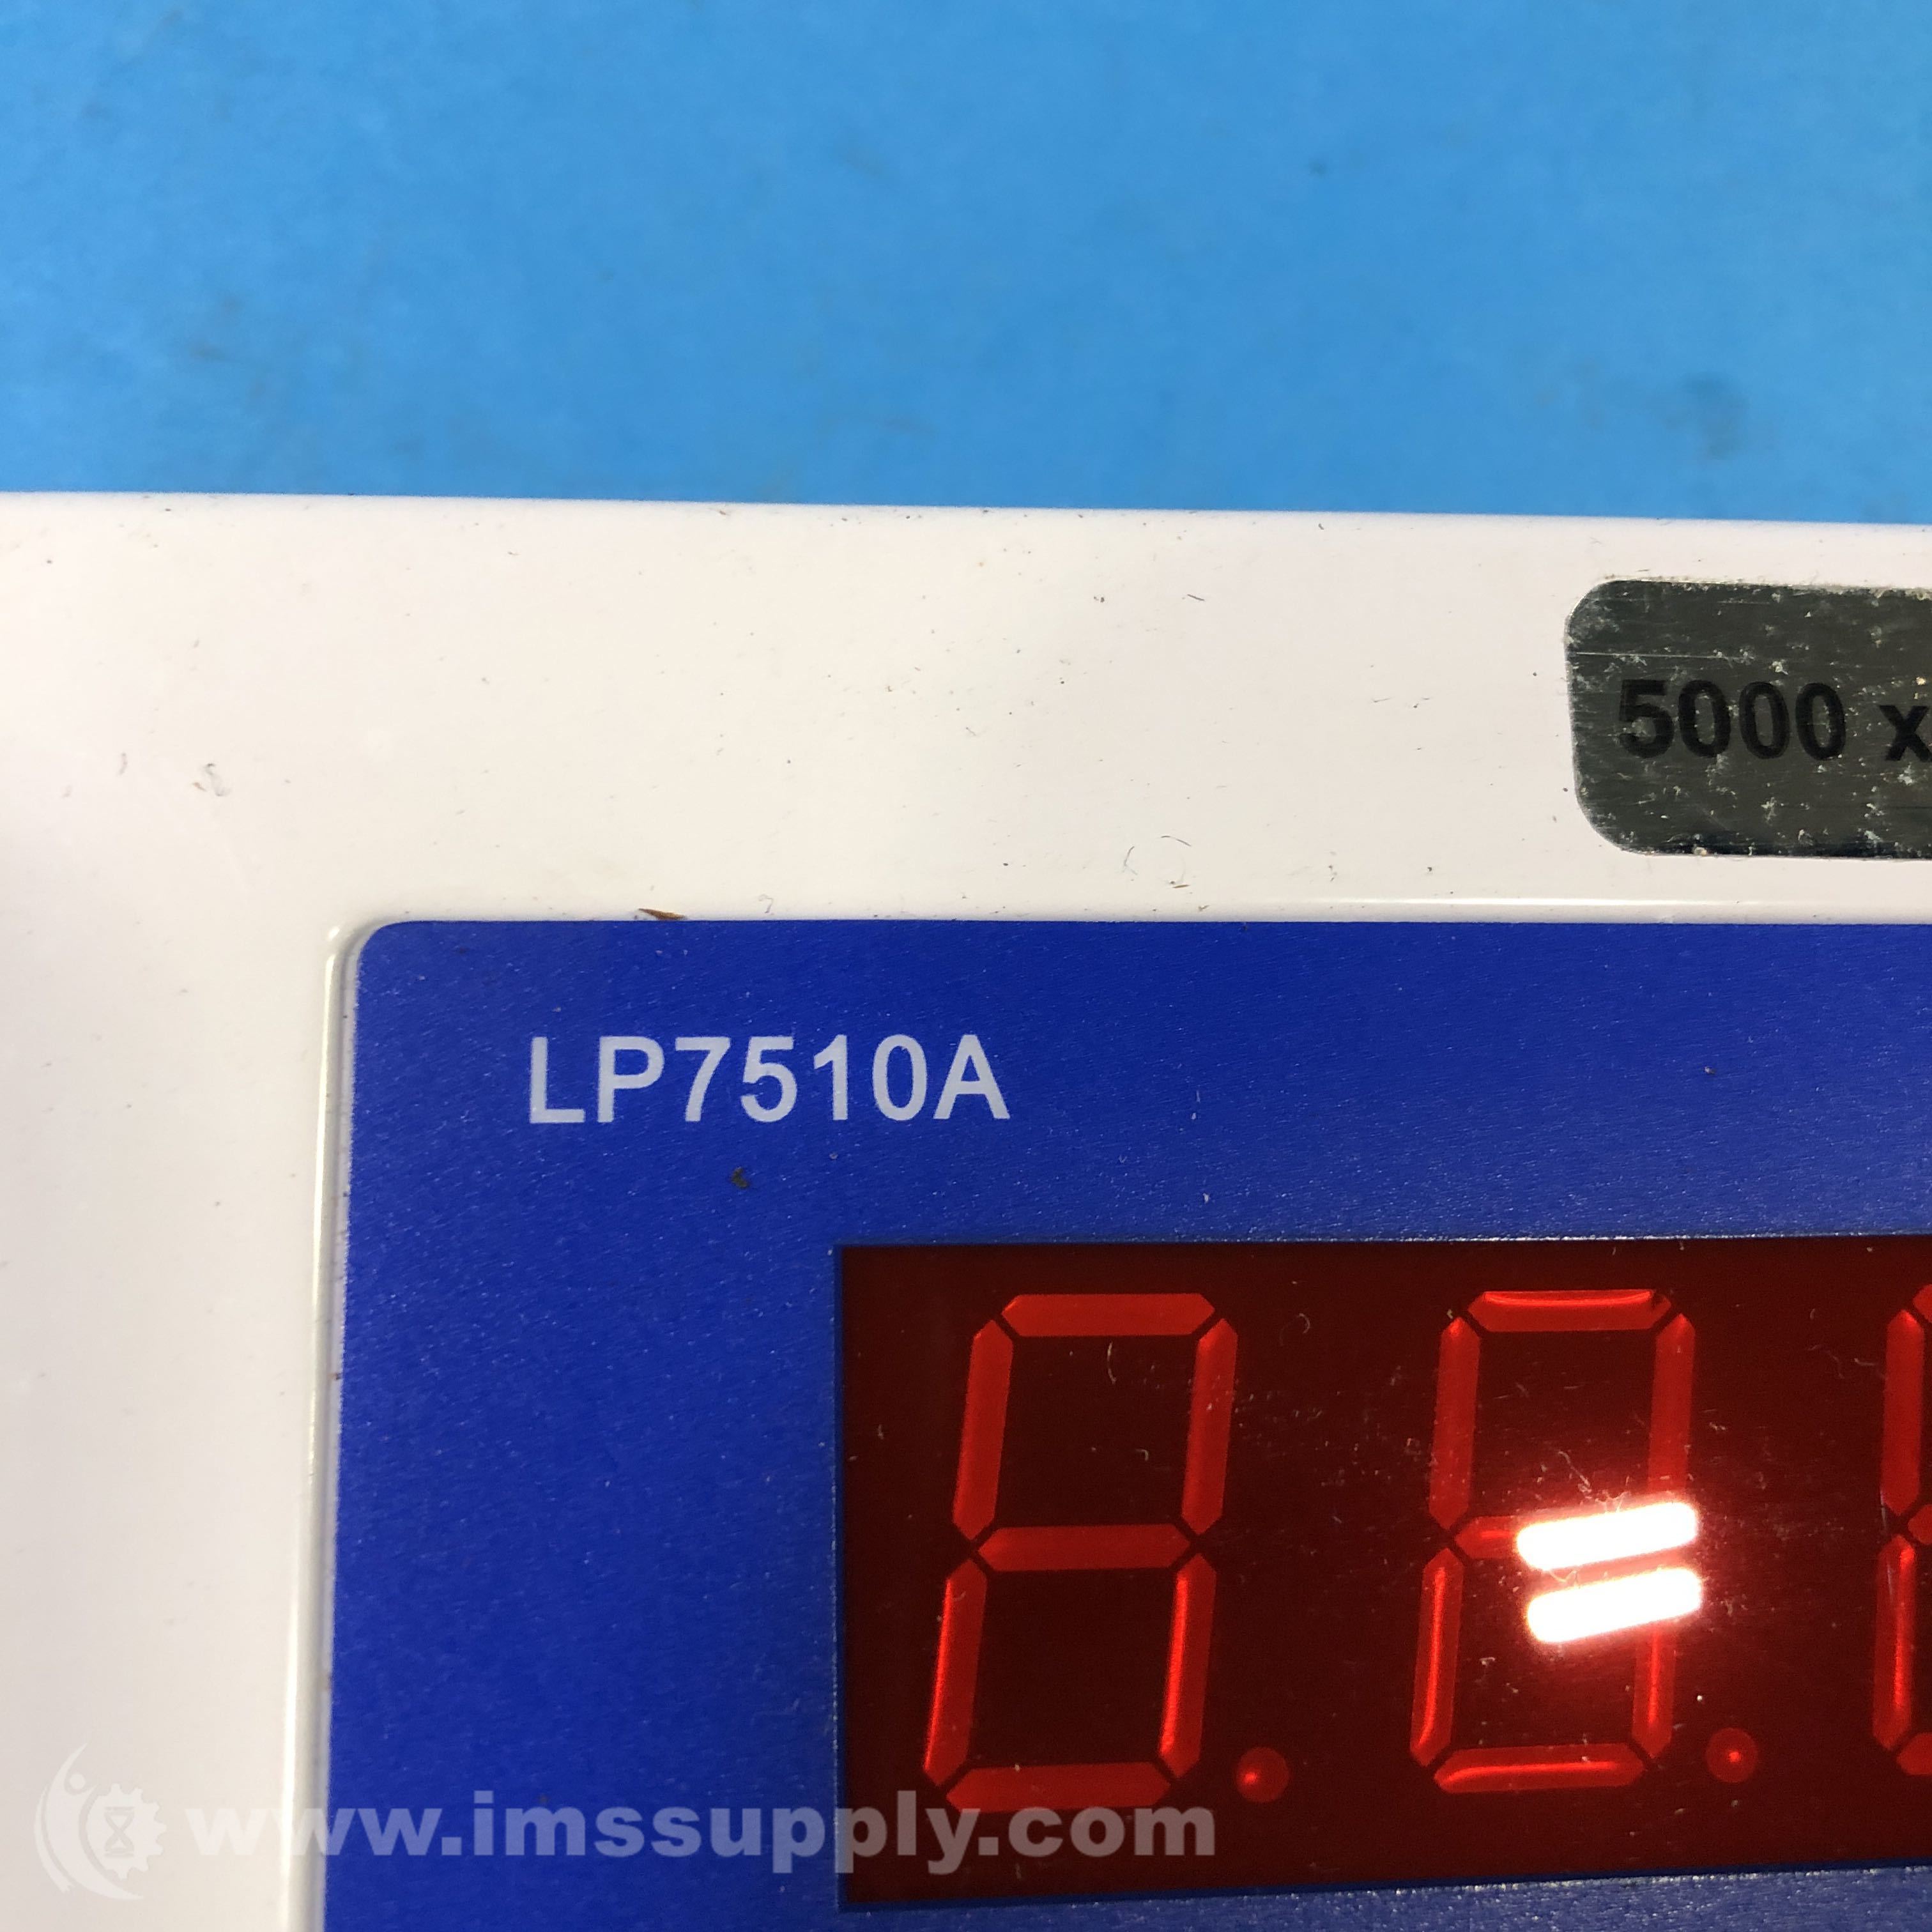 LP7510 Display Indicator Kit for Uline Low Profile Floor Scale H-754-LP7510  - Uline